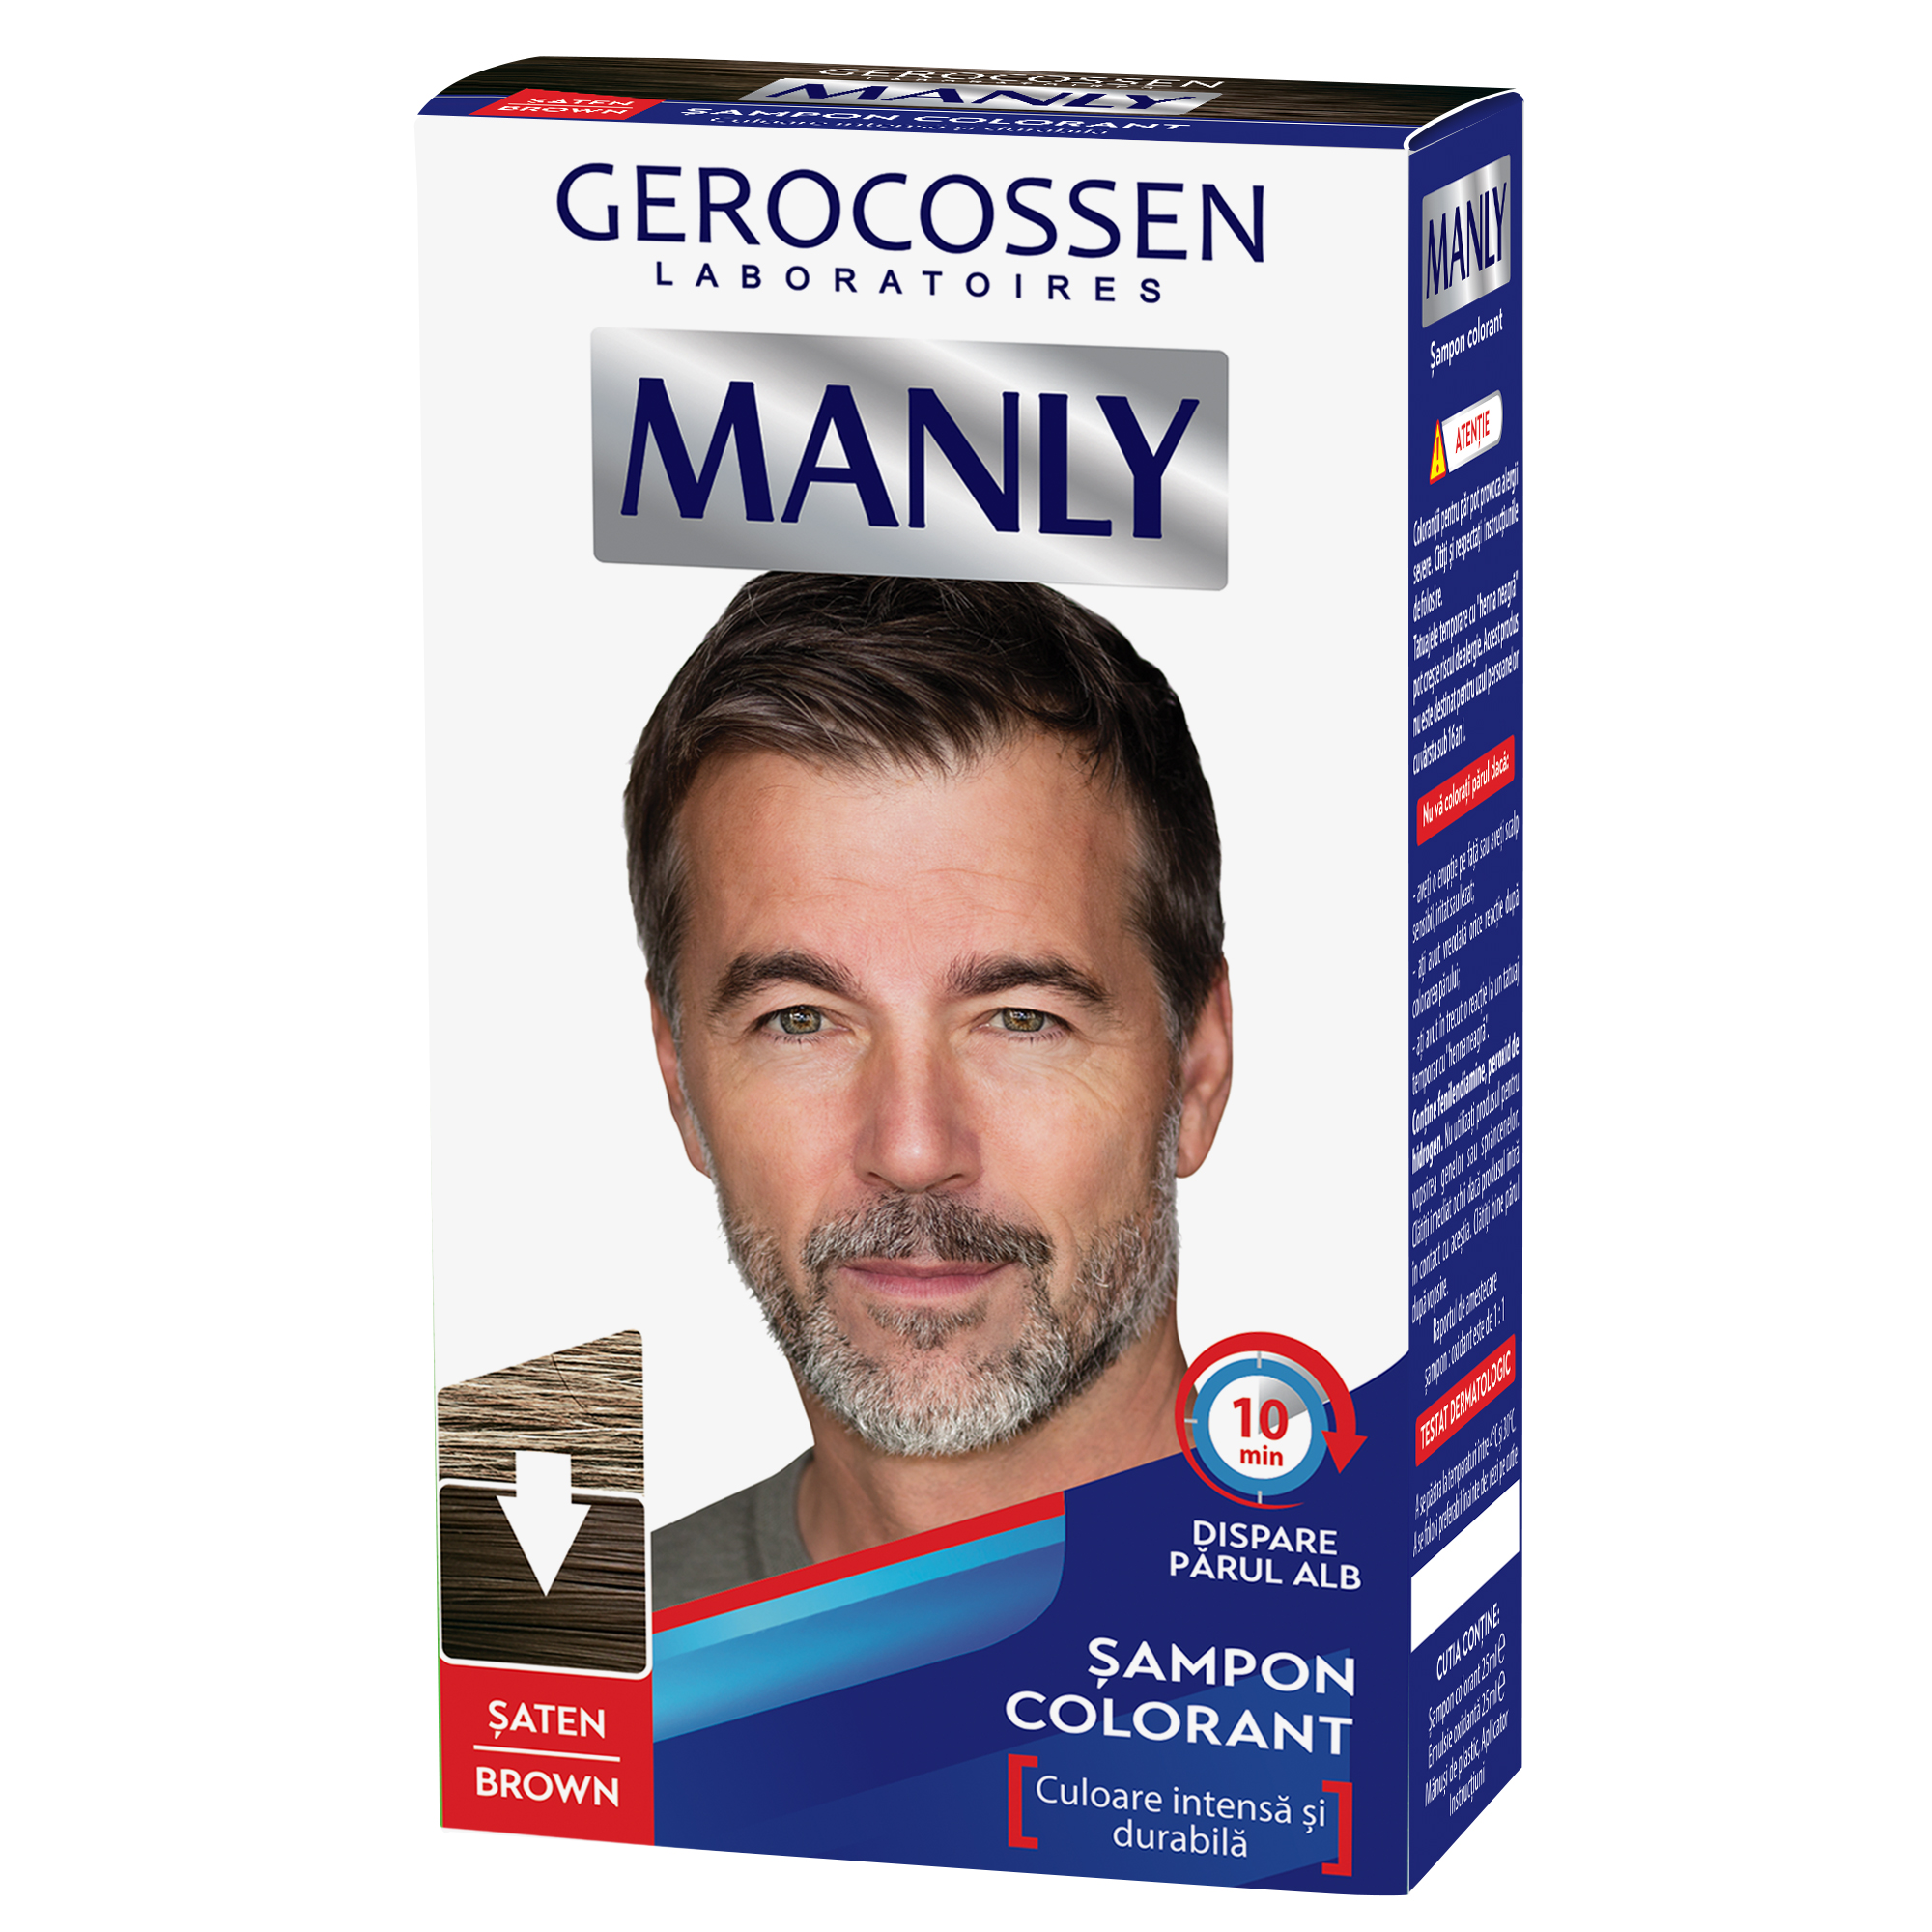 Sampon colorant pentru barbati, Saten, Manly, 25 ml, Gerocossen